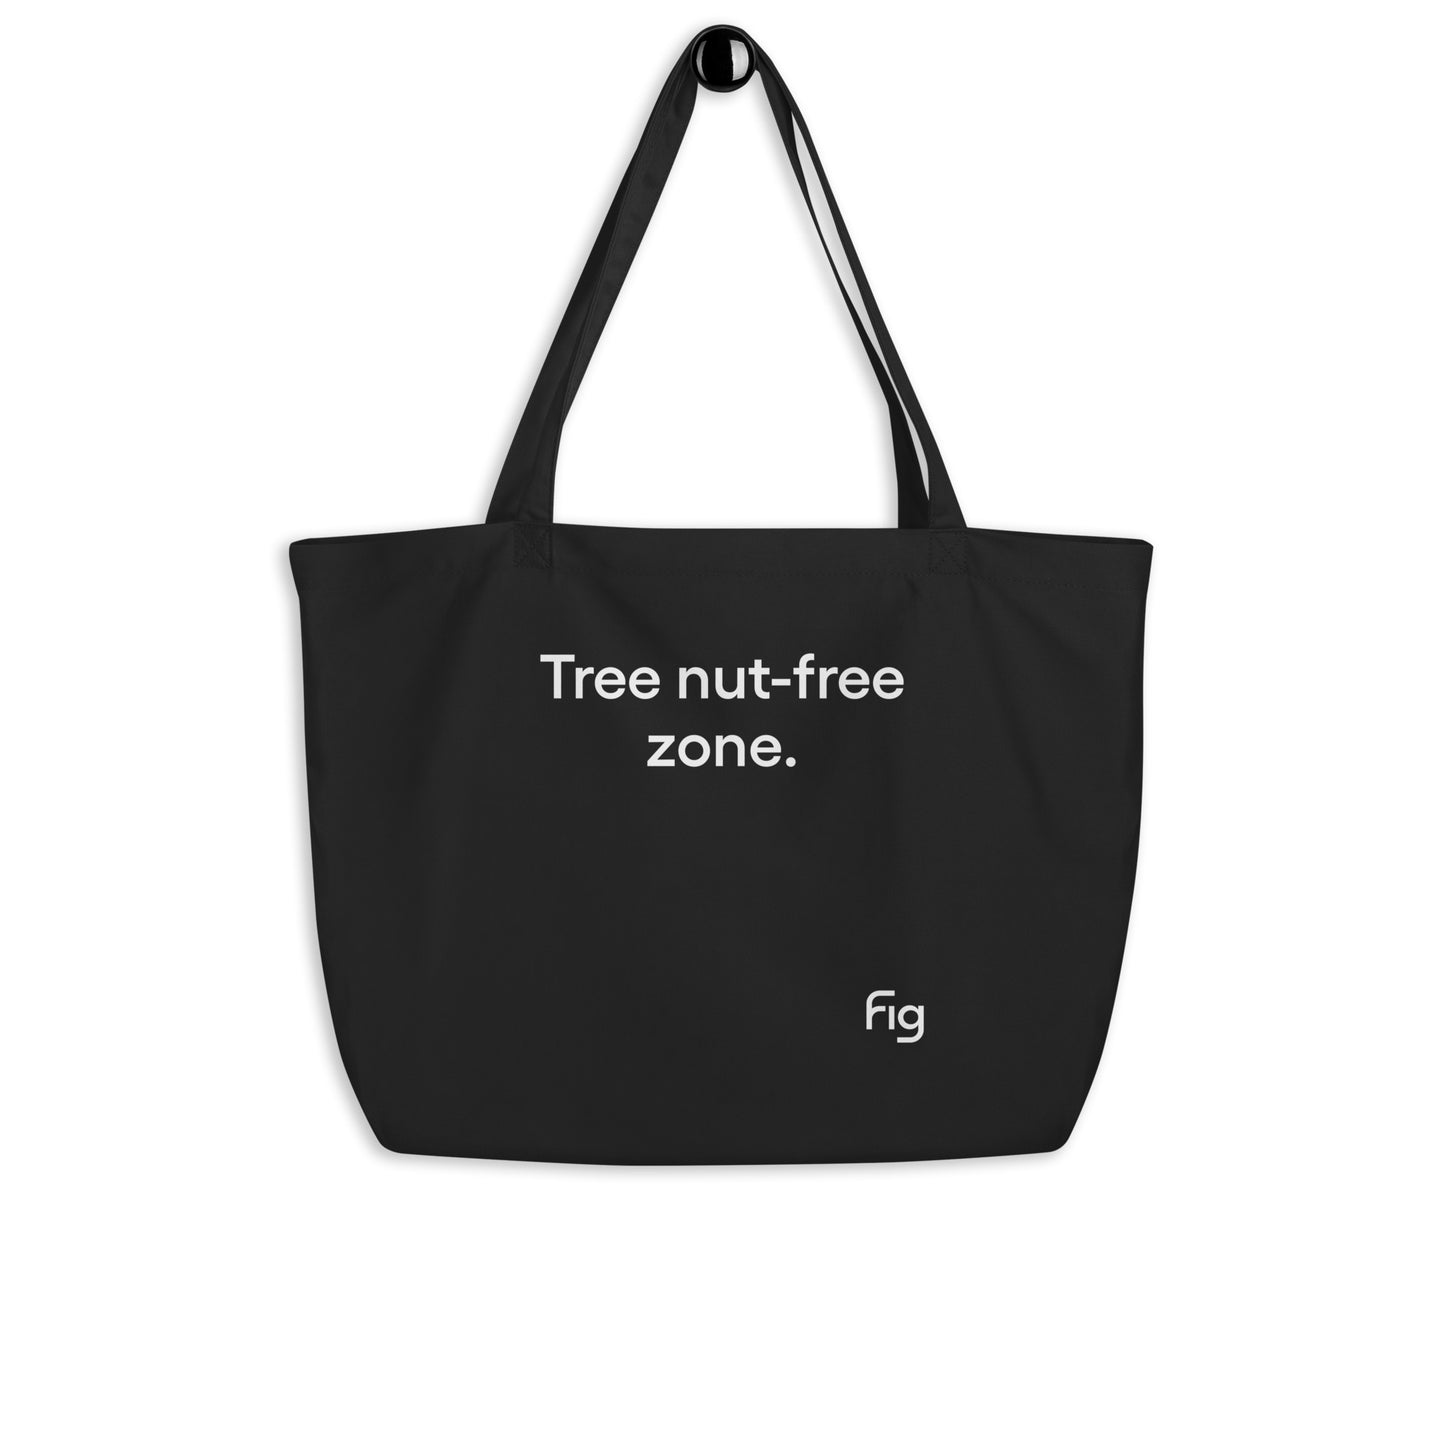 Tree nut-free zone | Large organic tote bag